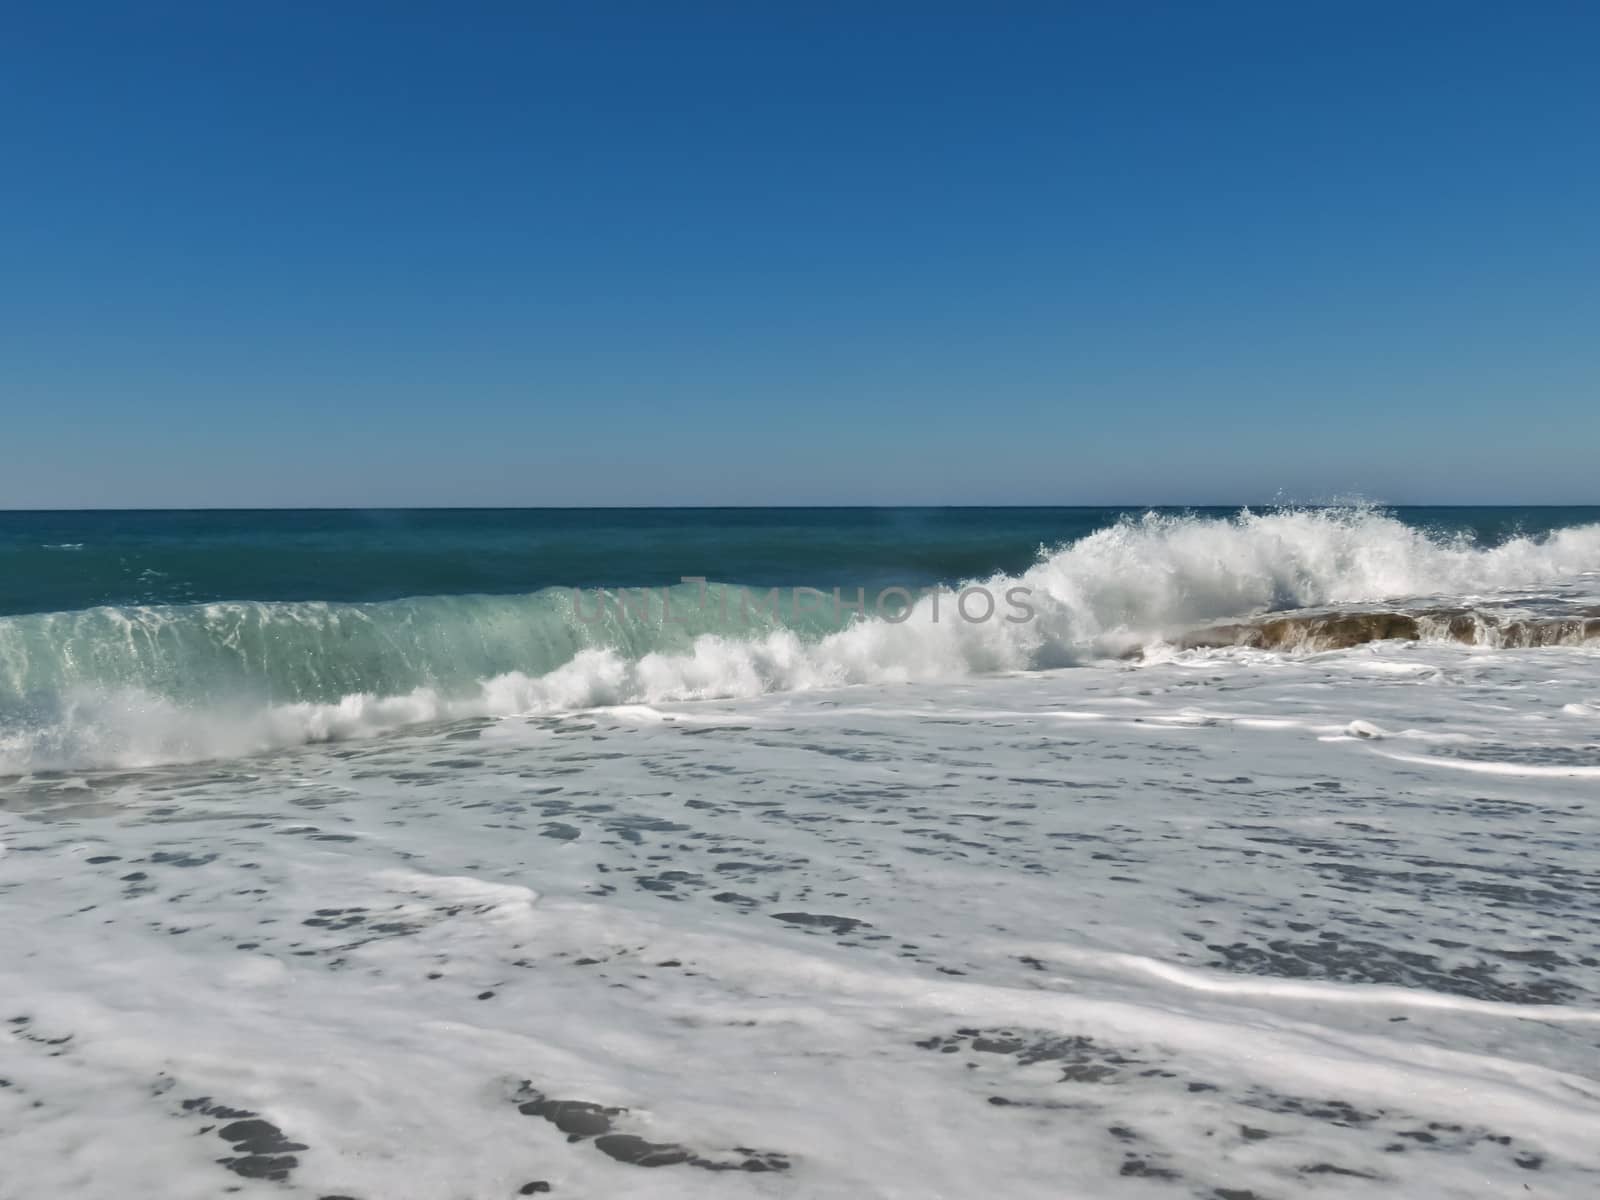 Large white foamy wave rolls on the Mediterranean Sea